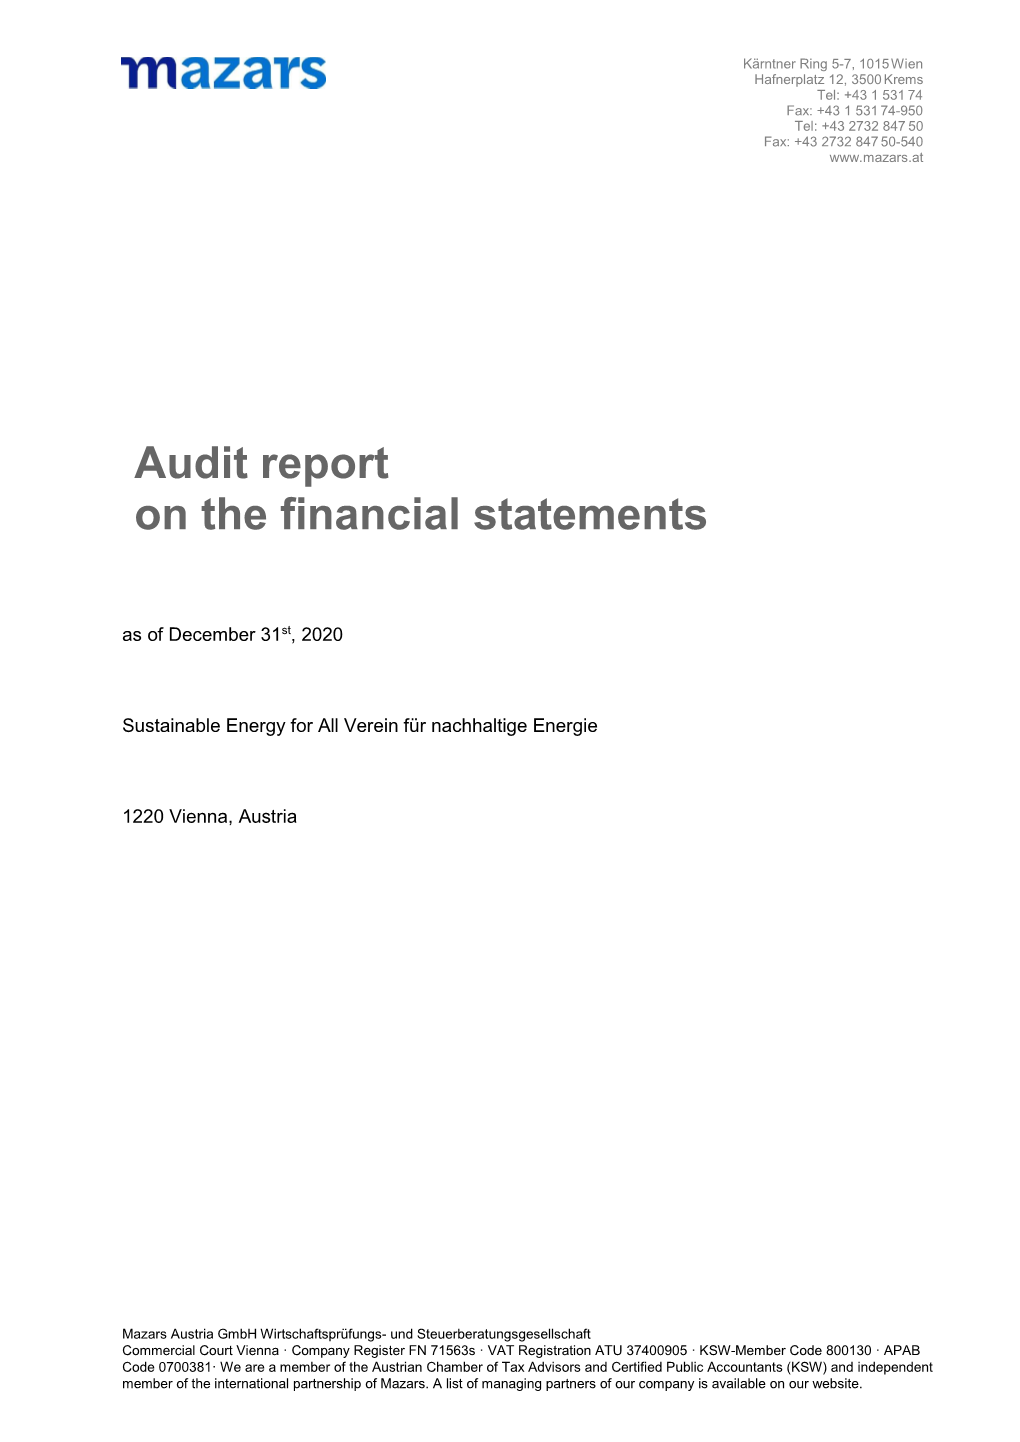 Financial Audit Report 2020